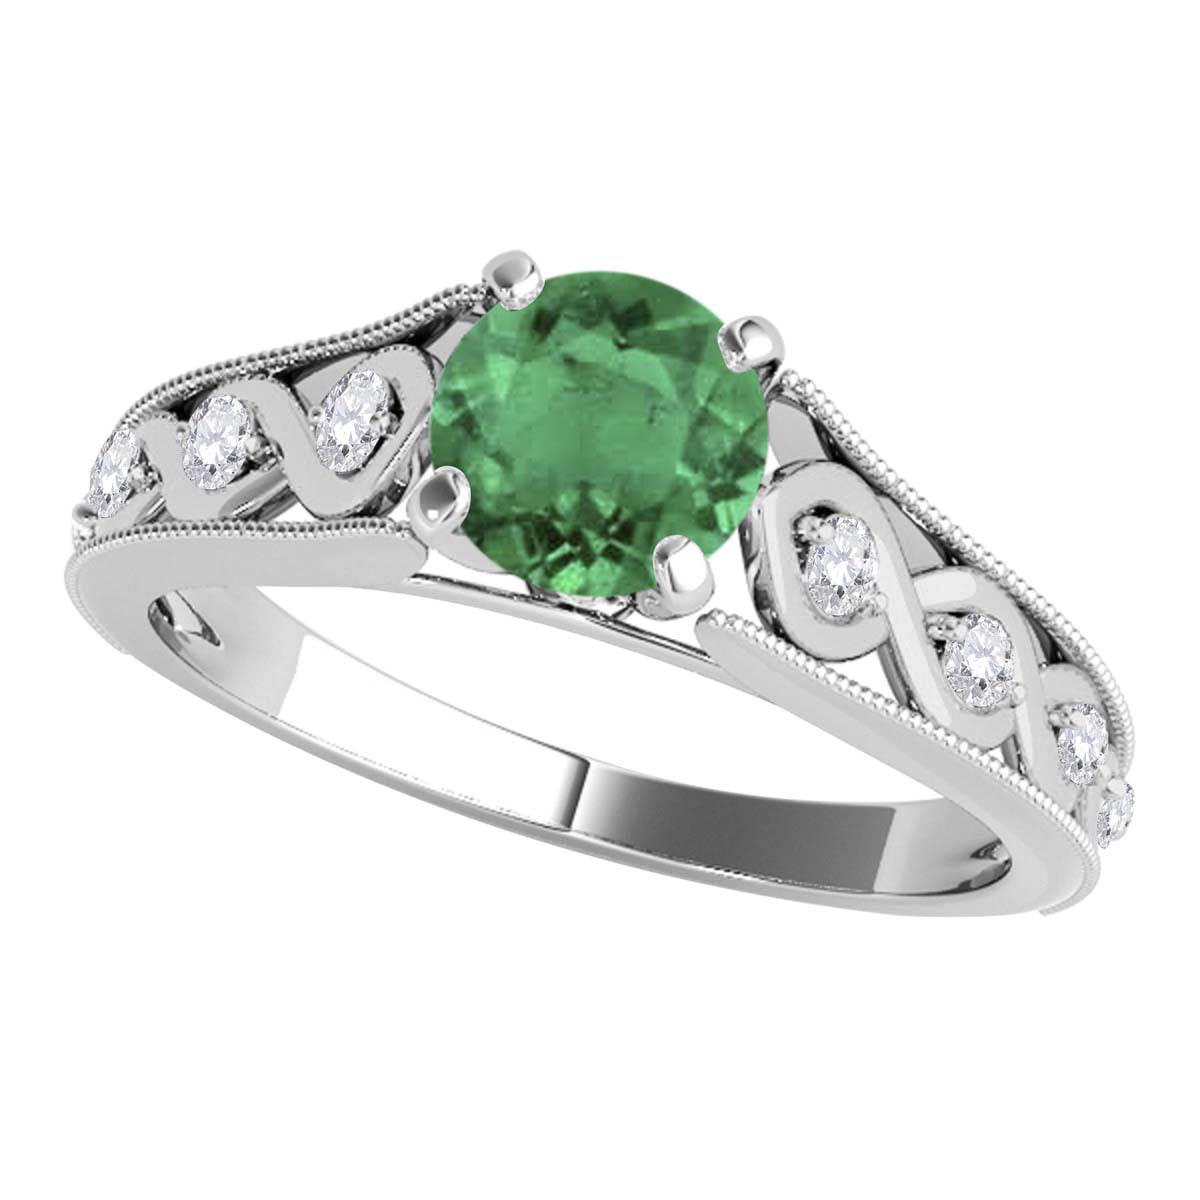 customise single stone rings designs engagement| Alibaba.com